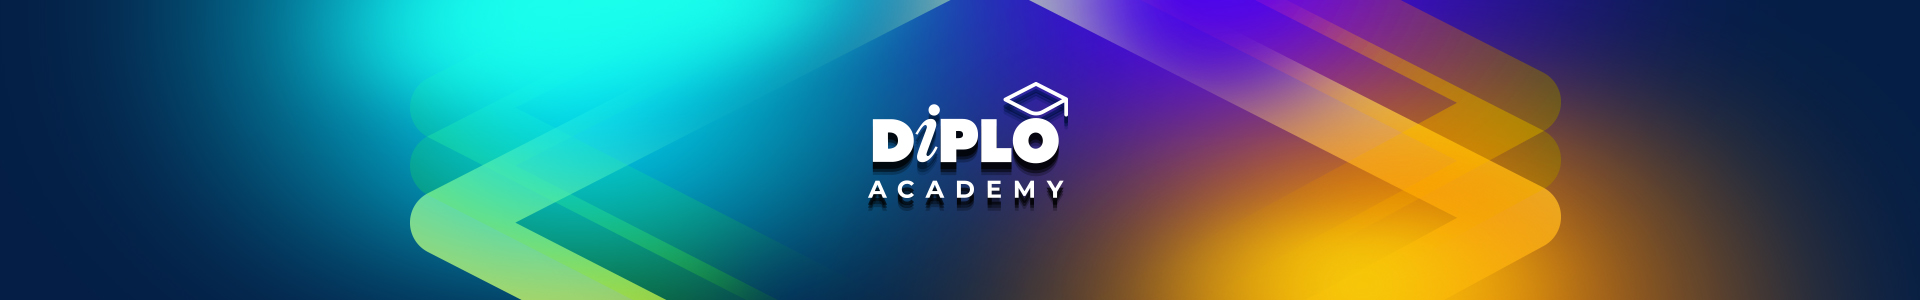 Diplo Academy